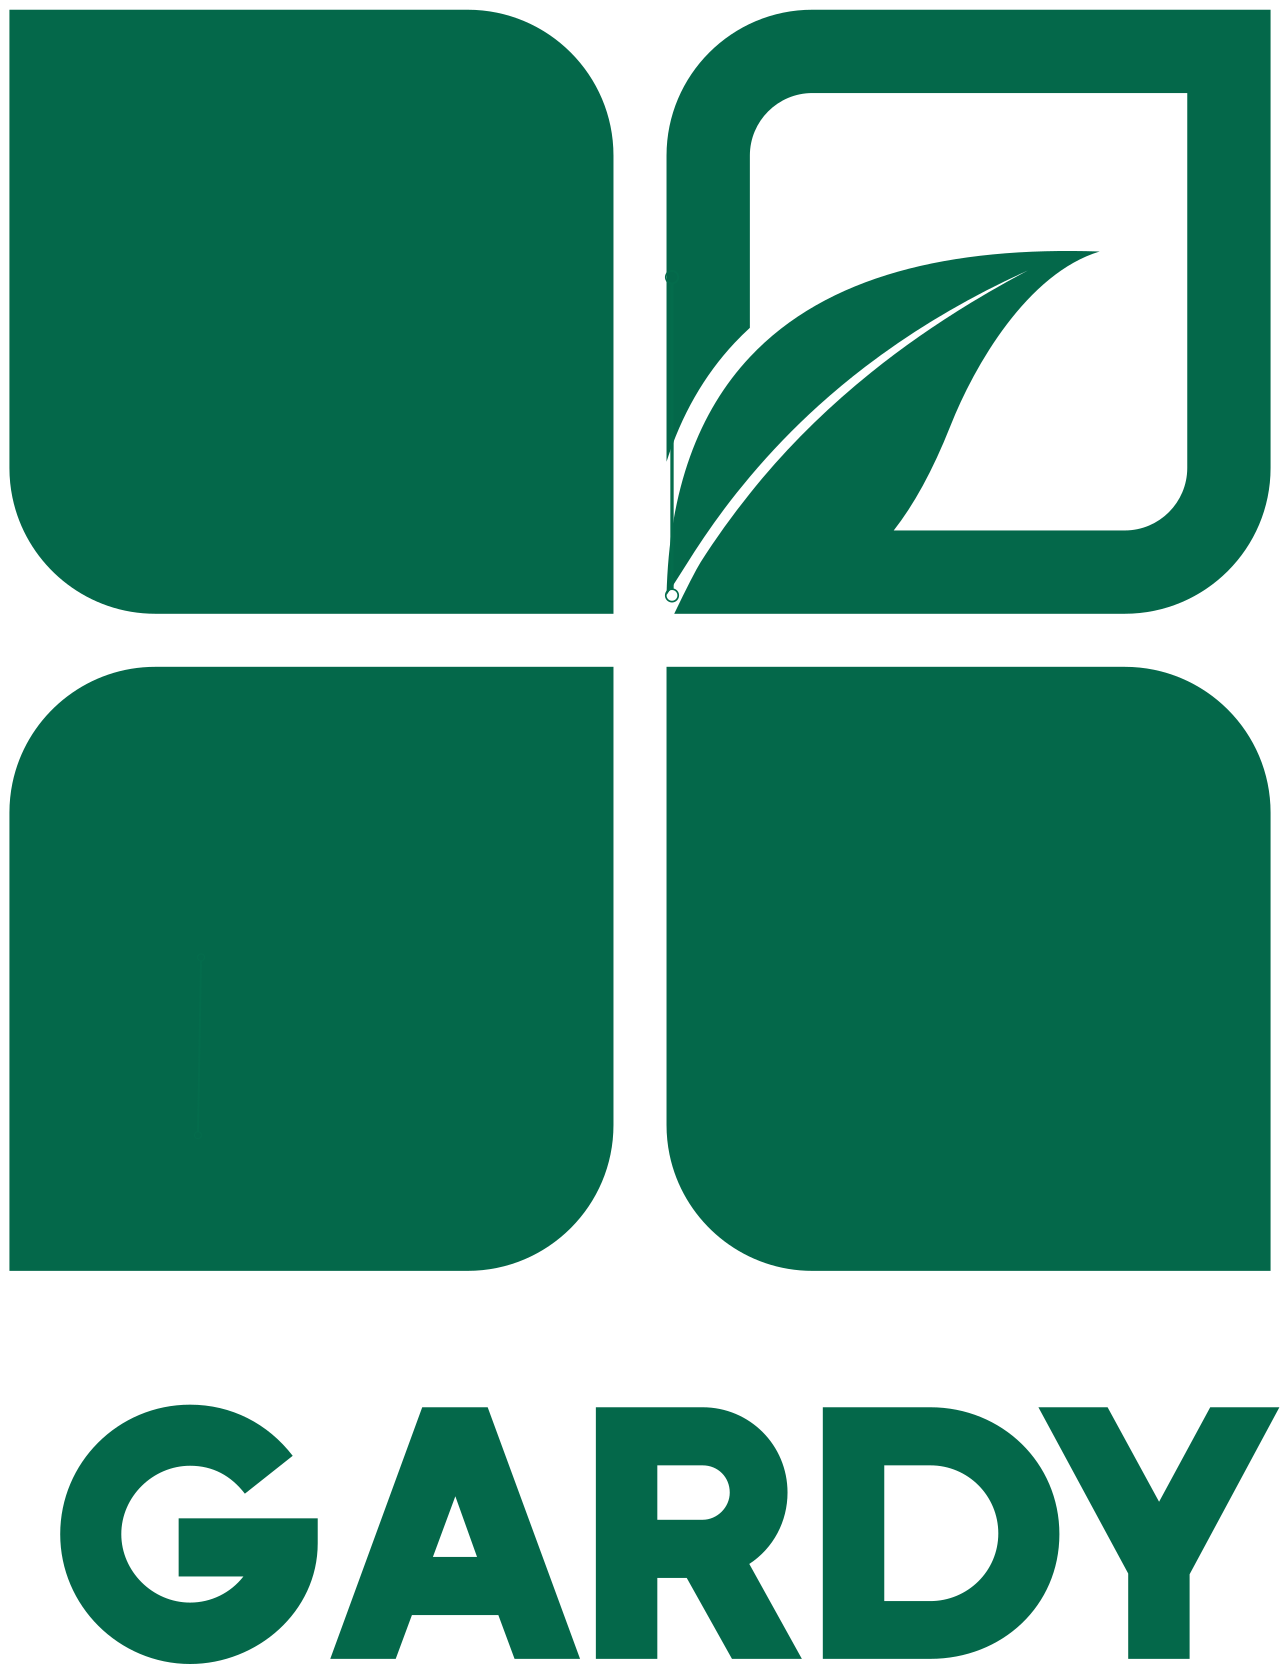 GARDY's logo